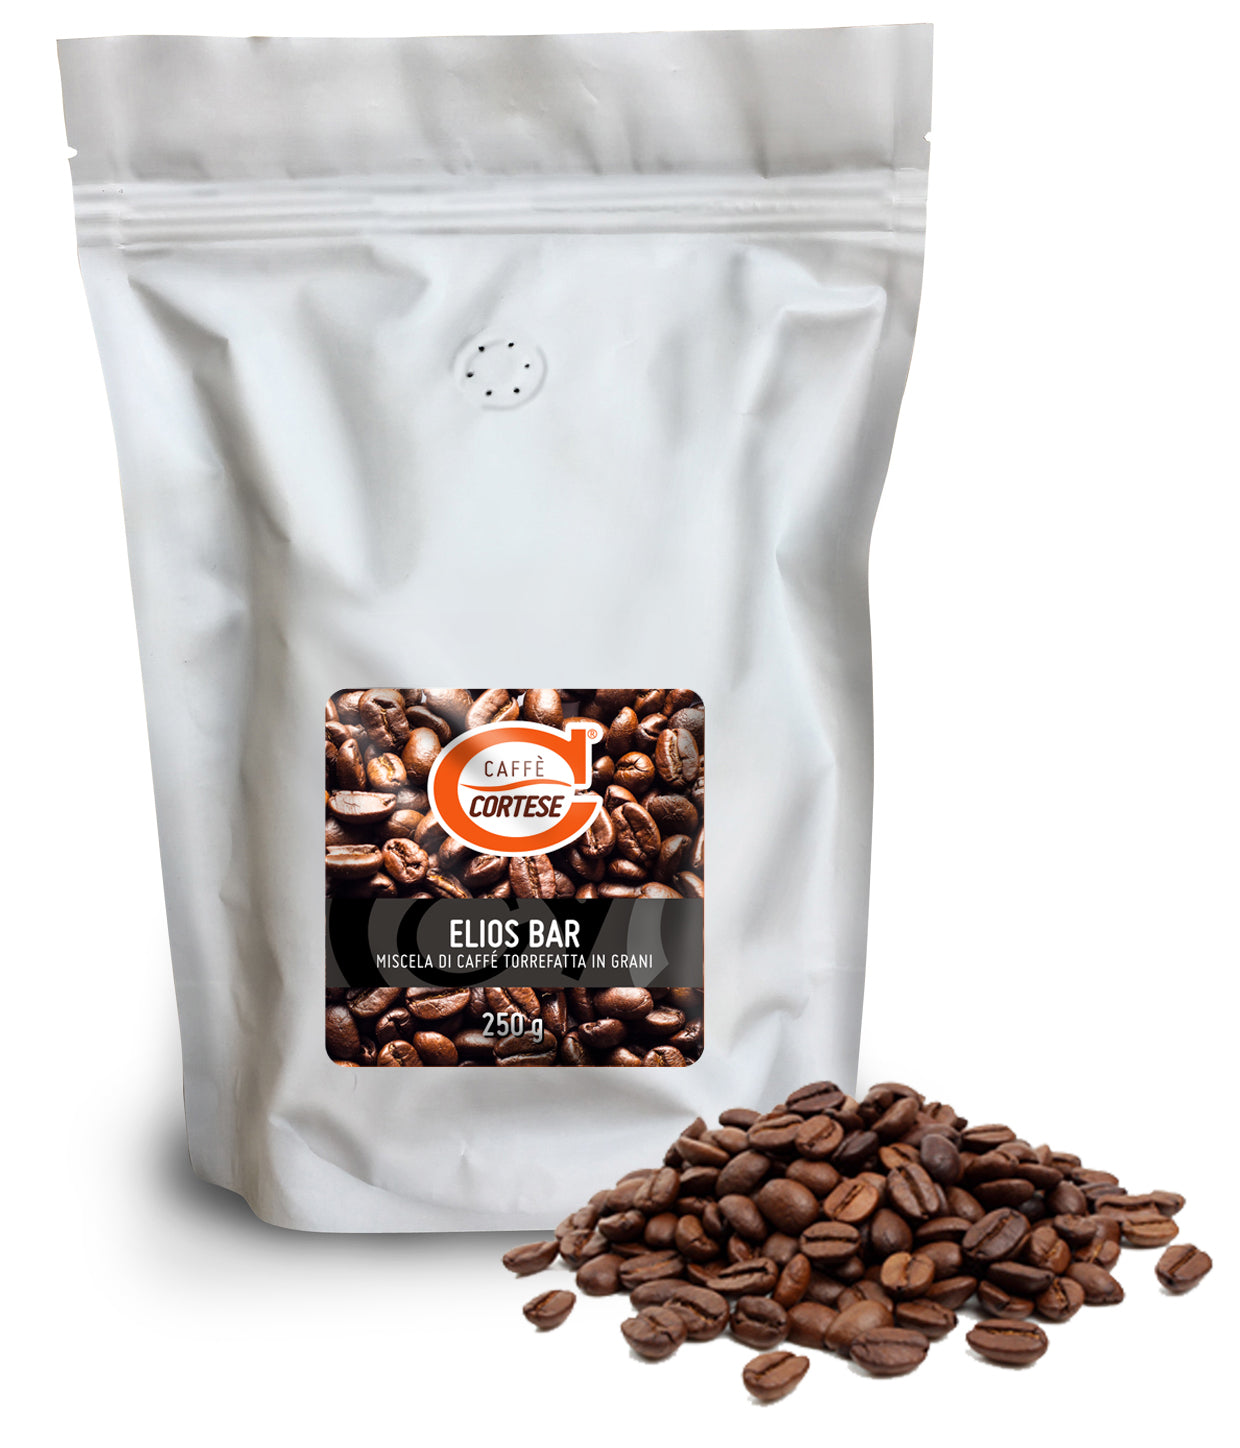 Grani Caffè Cortese miscela di caffè tostato in grani - Elios Bar 250 g